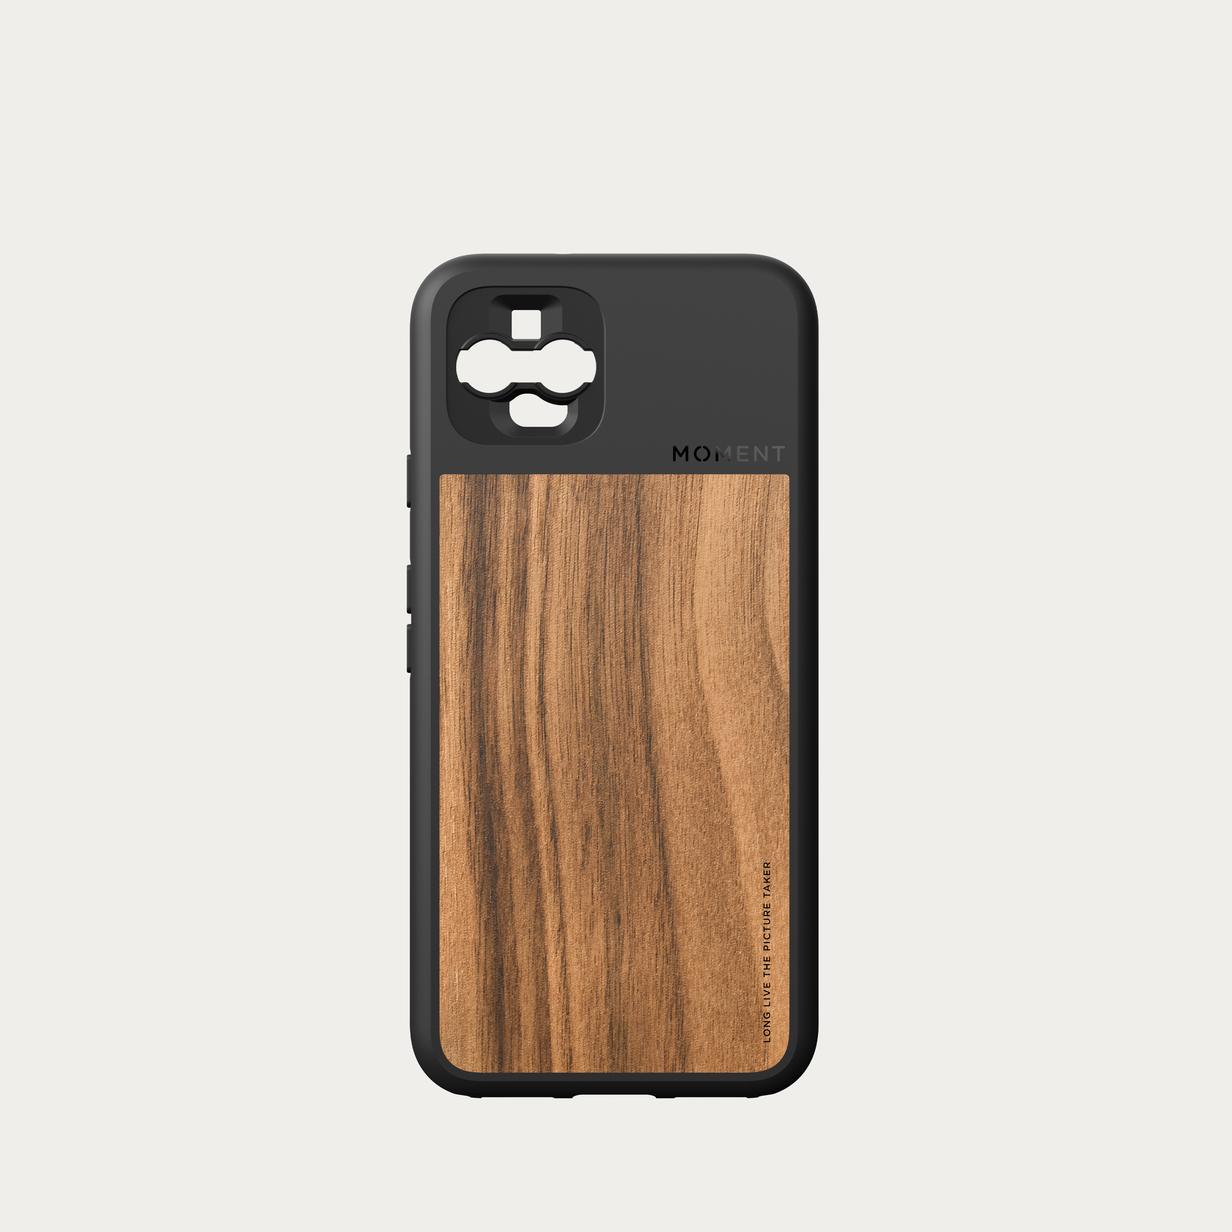 314 020 Moment Pixel4 Case Walnut Wood 01